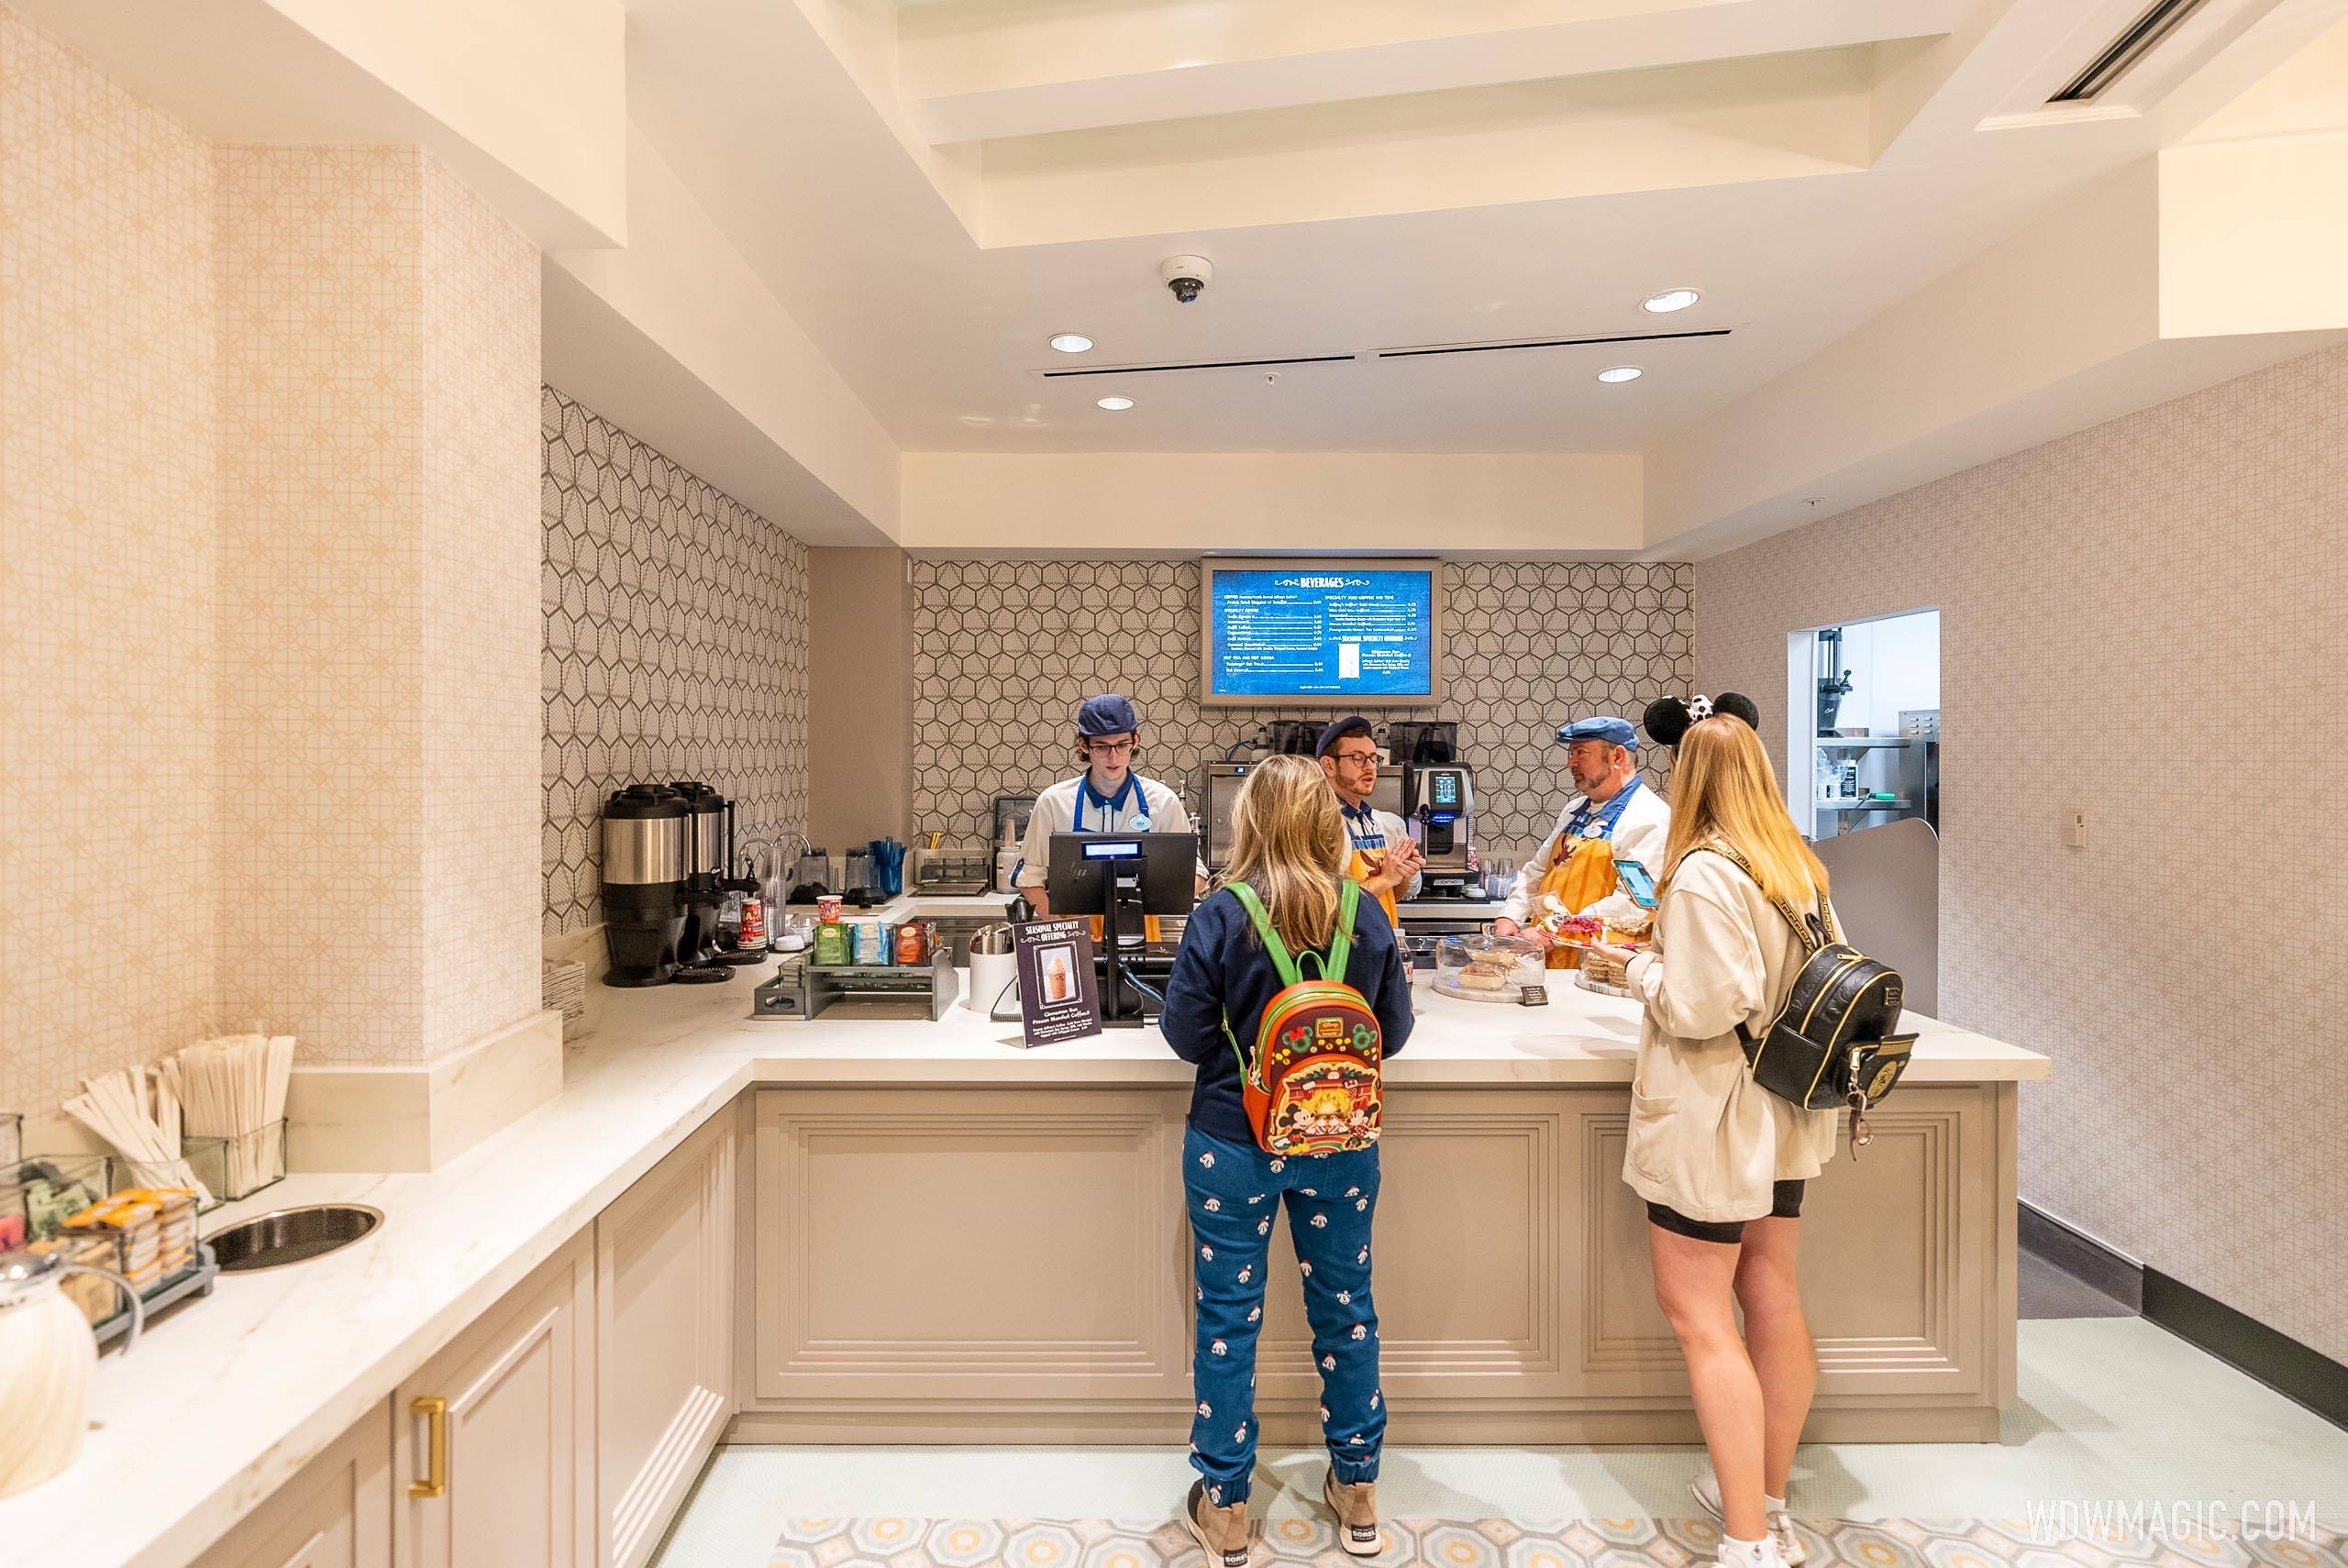 A look inside the new 'Carousel Coffee' at Disney's BoardWalk Inn